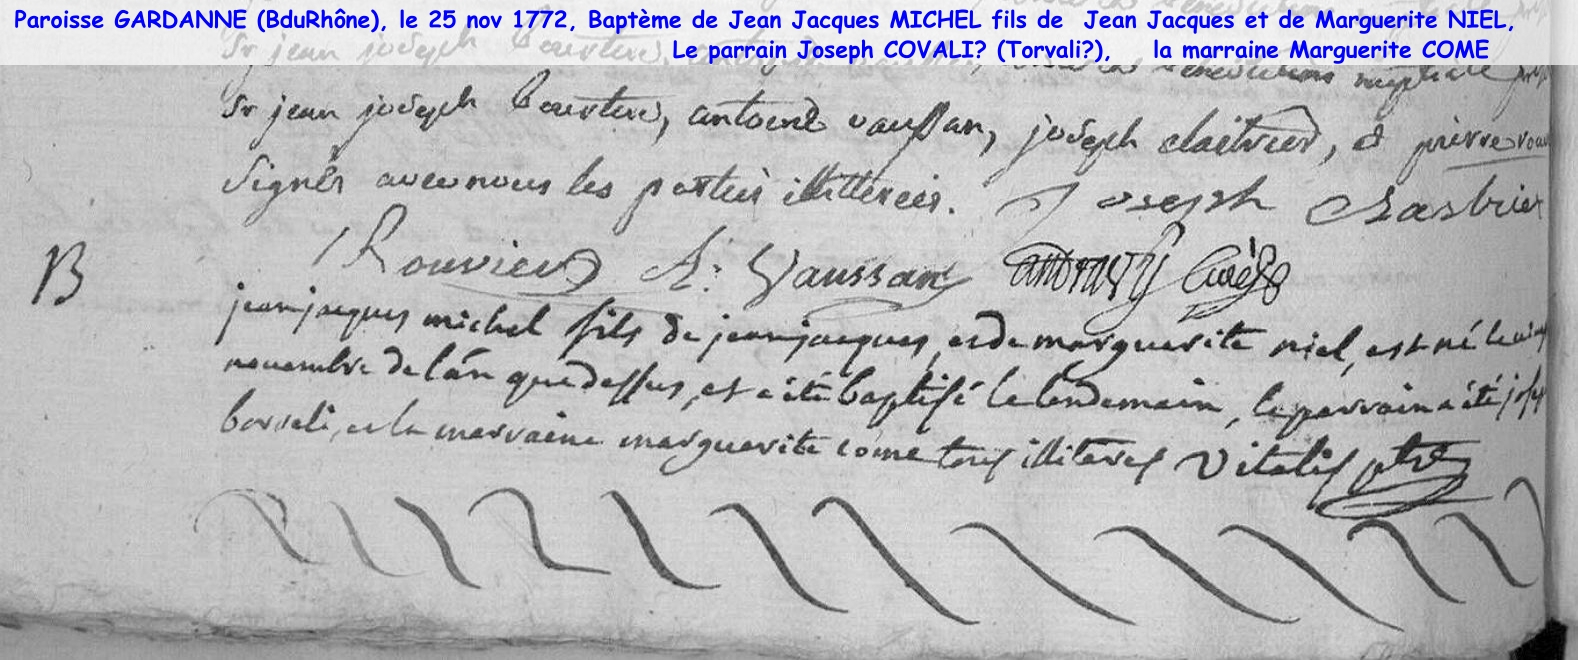 IBcseCgIfx6_1772-MICHEL-JJ-o25nov-Gardanne.JPG